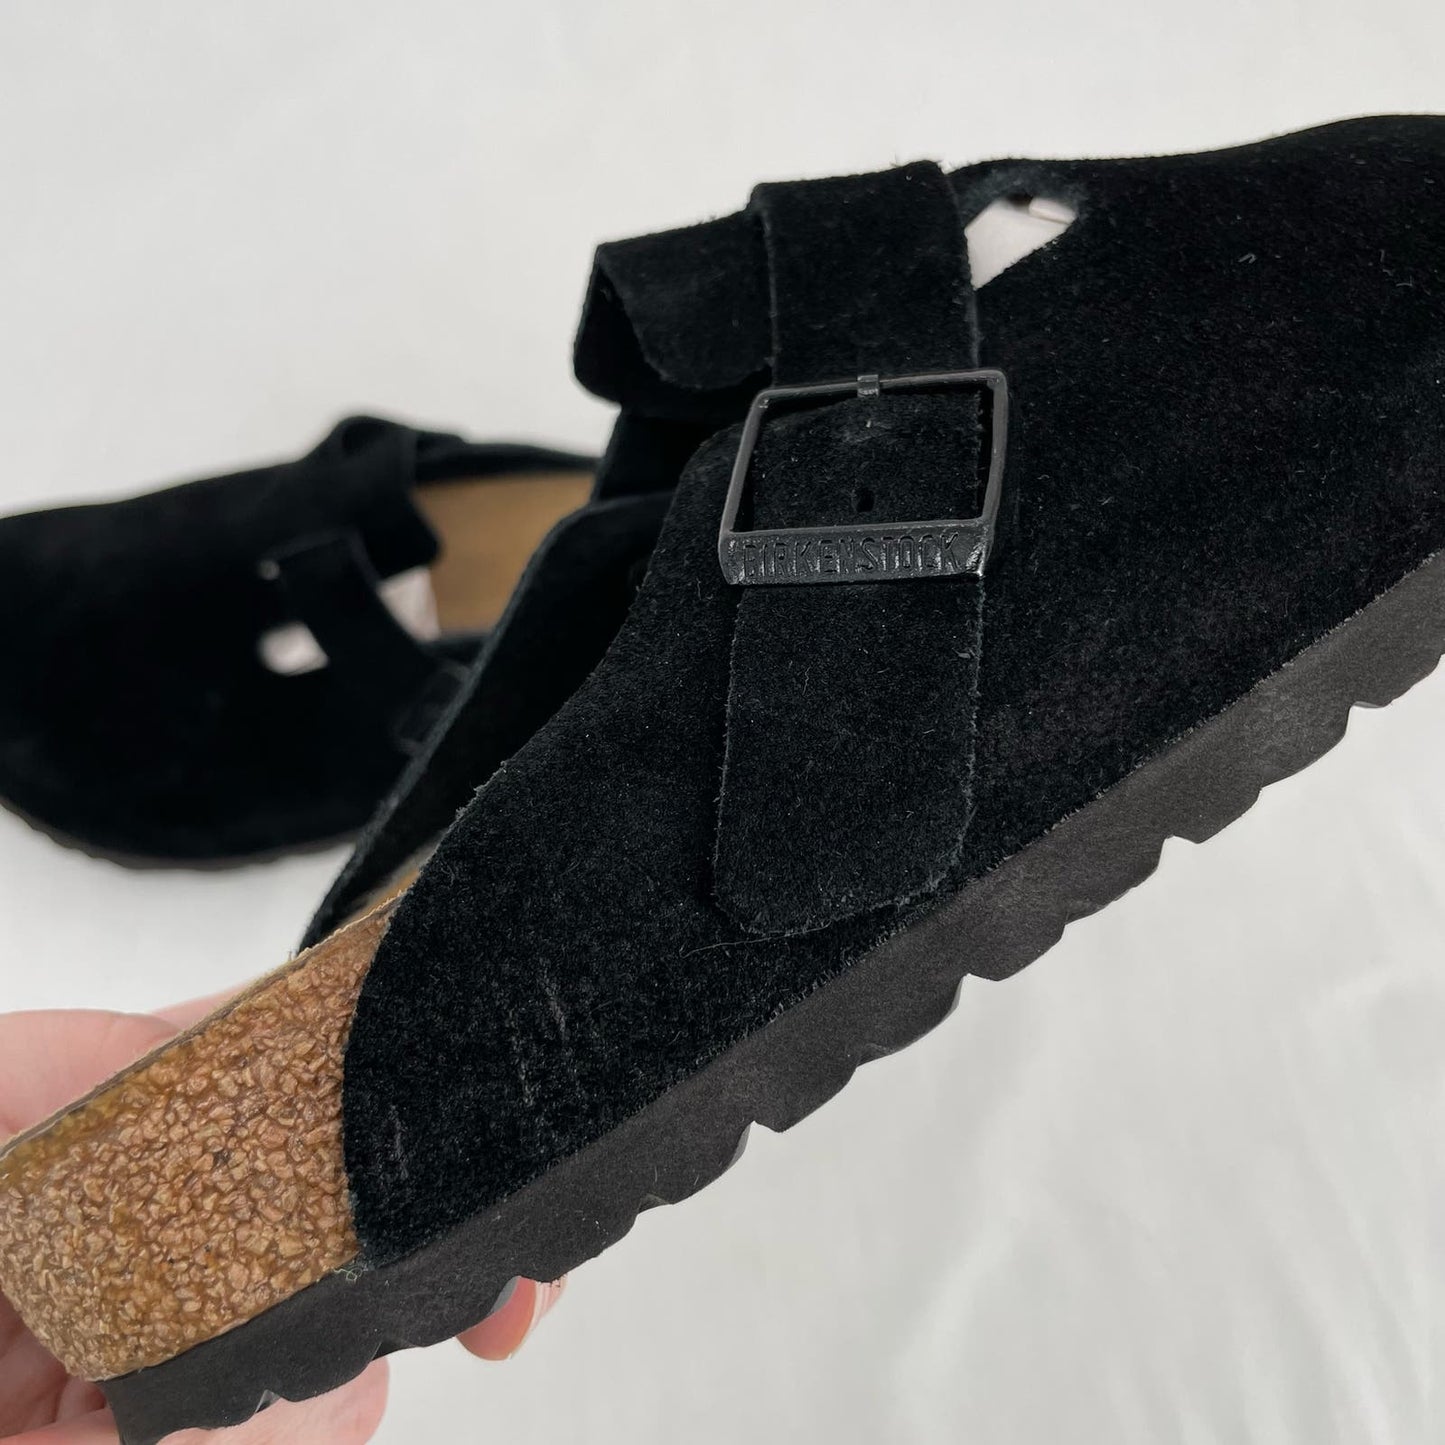 Birkenstock Black Suede Boston Clogs Soft Leather Slip On Shoe Unisex Size EU 41